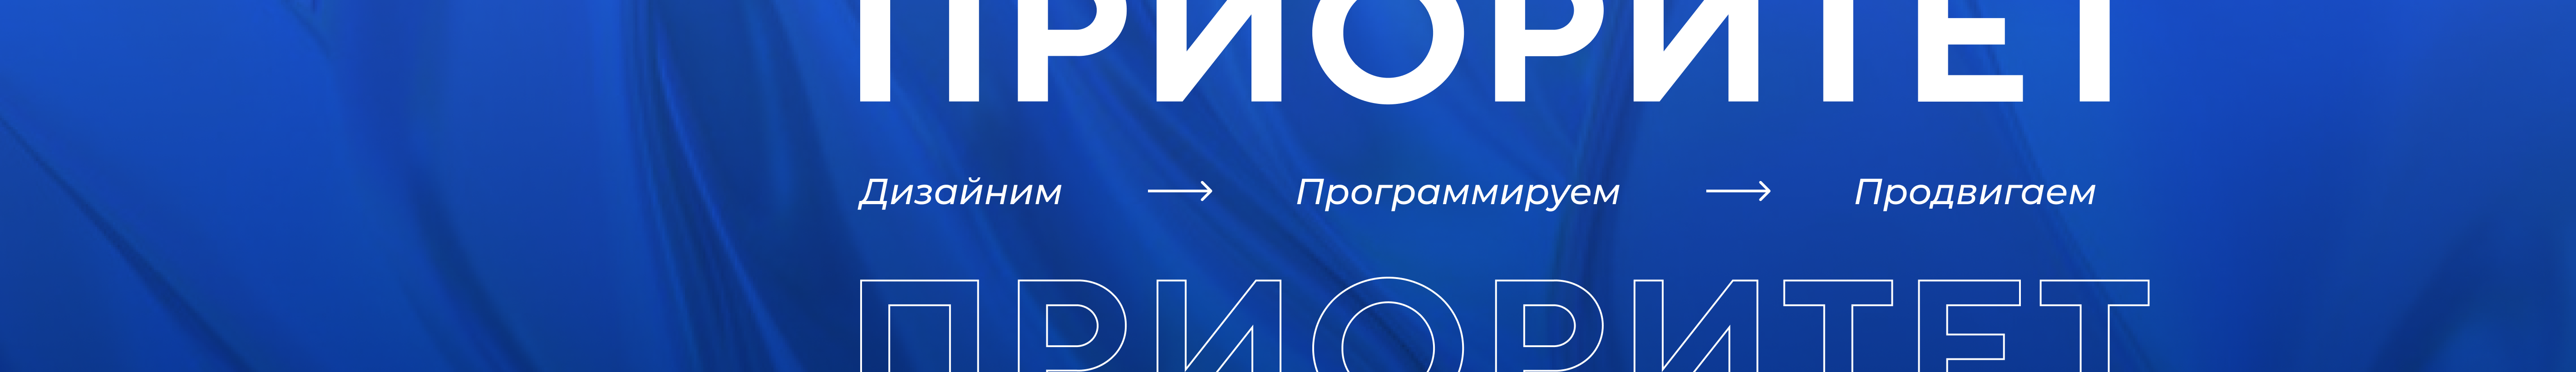 digital-agency Prioritet's profile banner